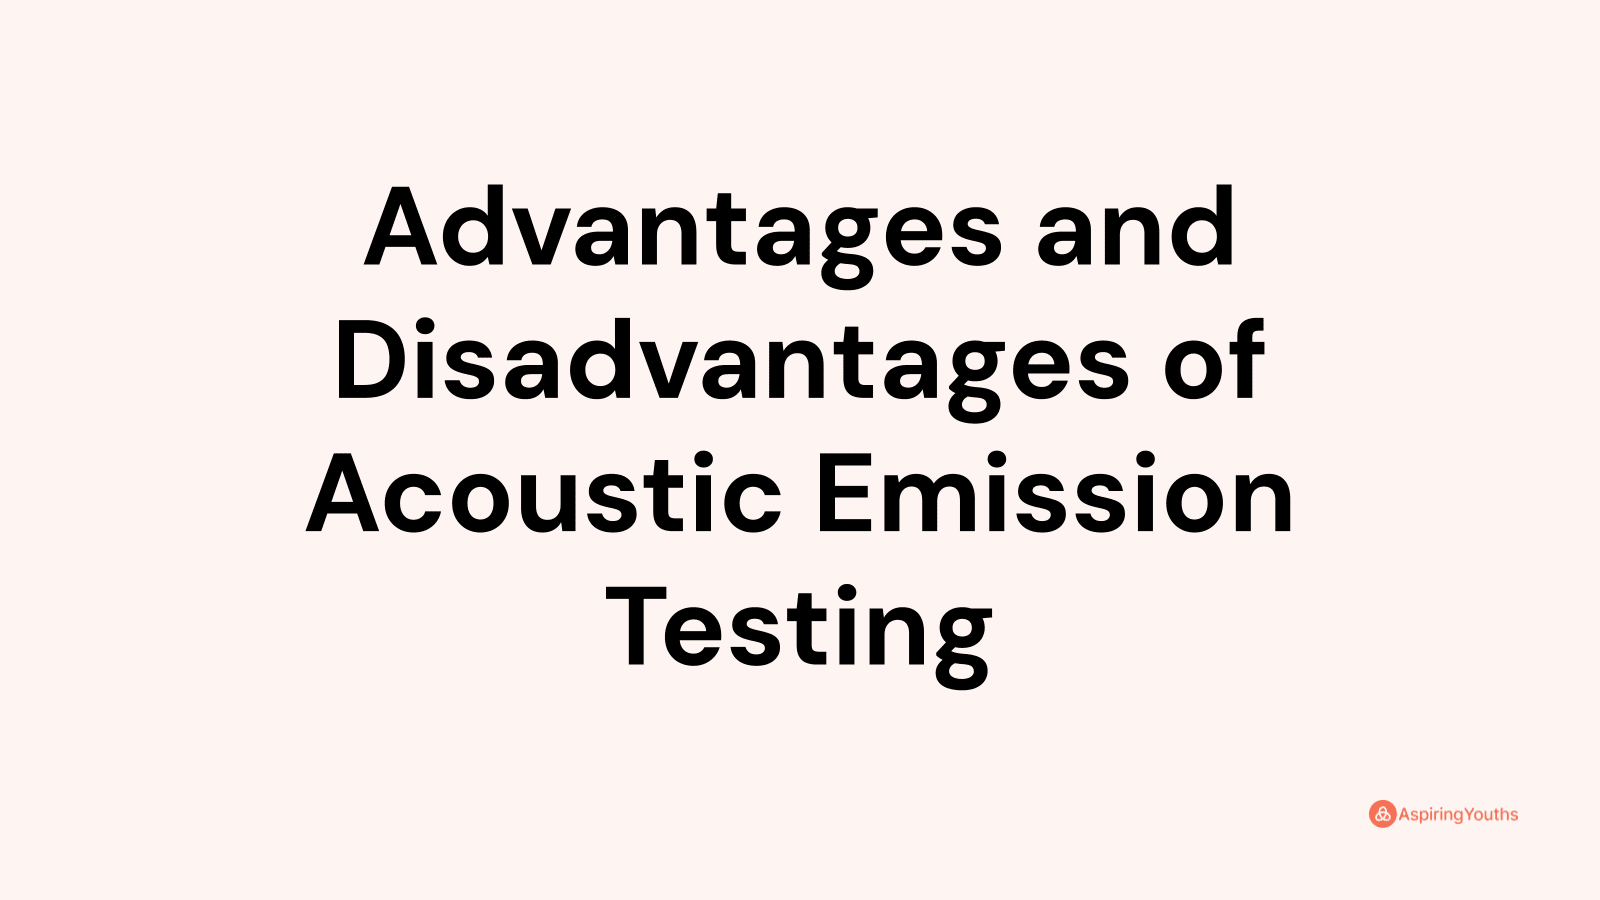 Advantages and disadvantages of Acoustic Emission Testing